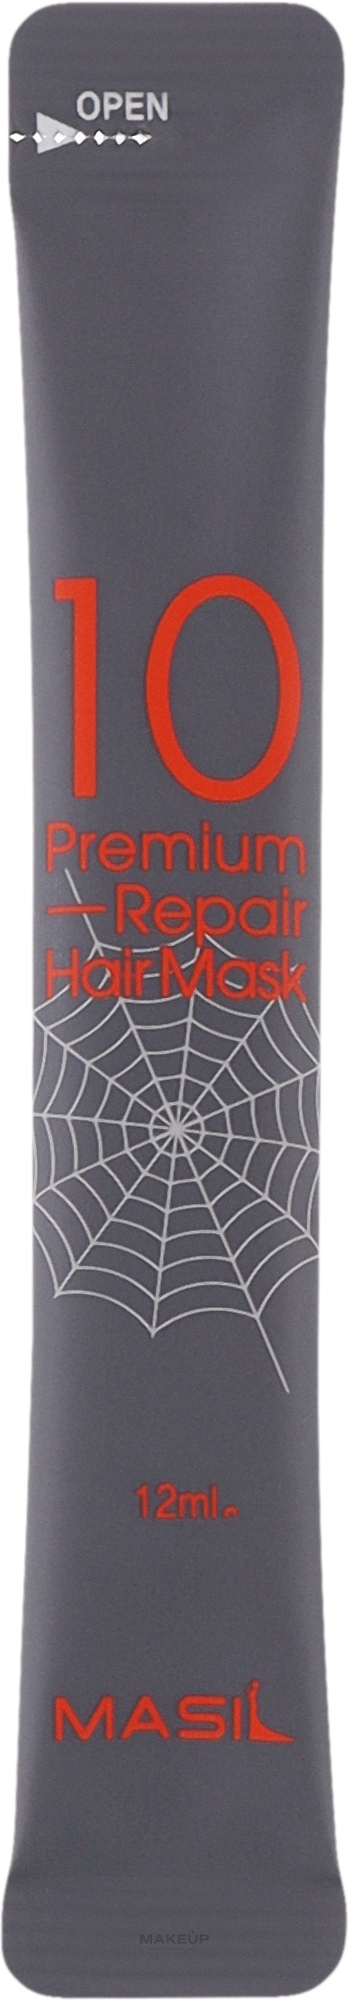 Восстанавливающая премиум-маска для волос - Masil 10 Premium Repair Hair Mask (мини) — фото 12ml